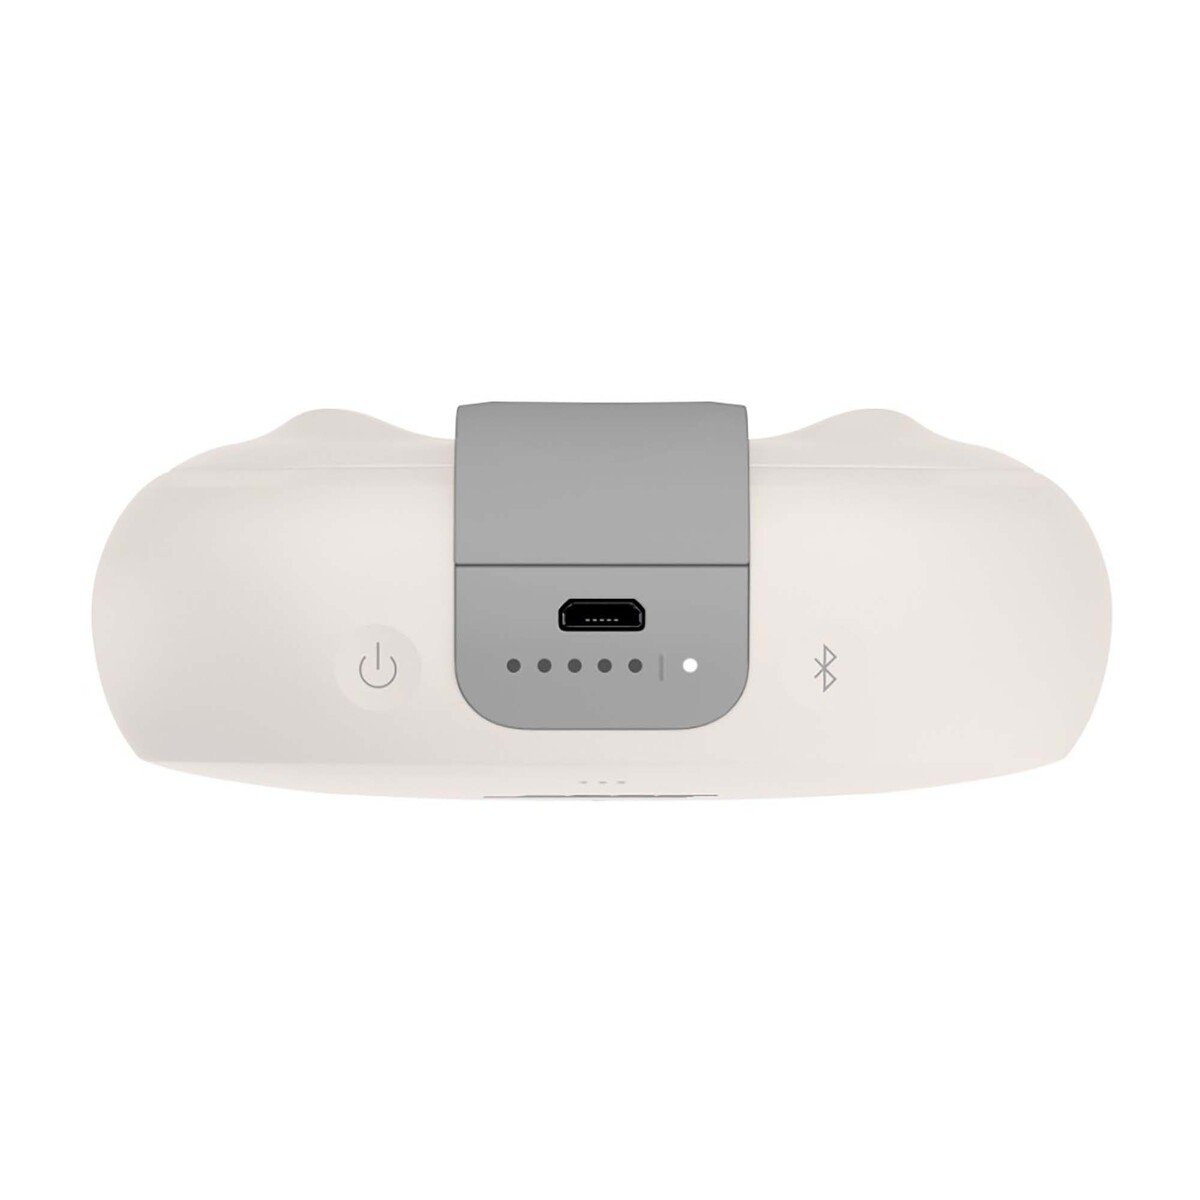 Bose SoundLink Micro Bluetooth speaker 783342-0400 White Smoke